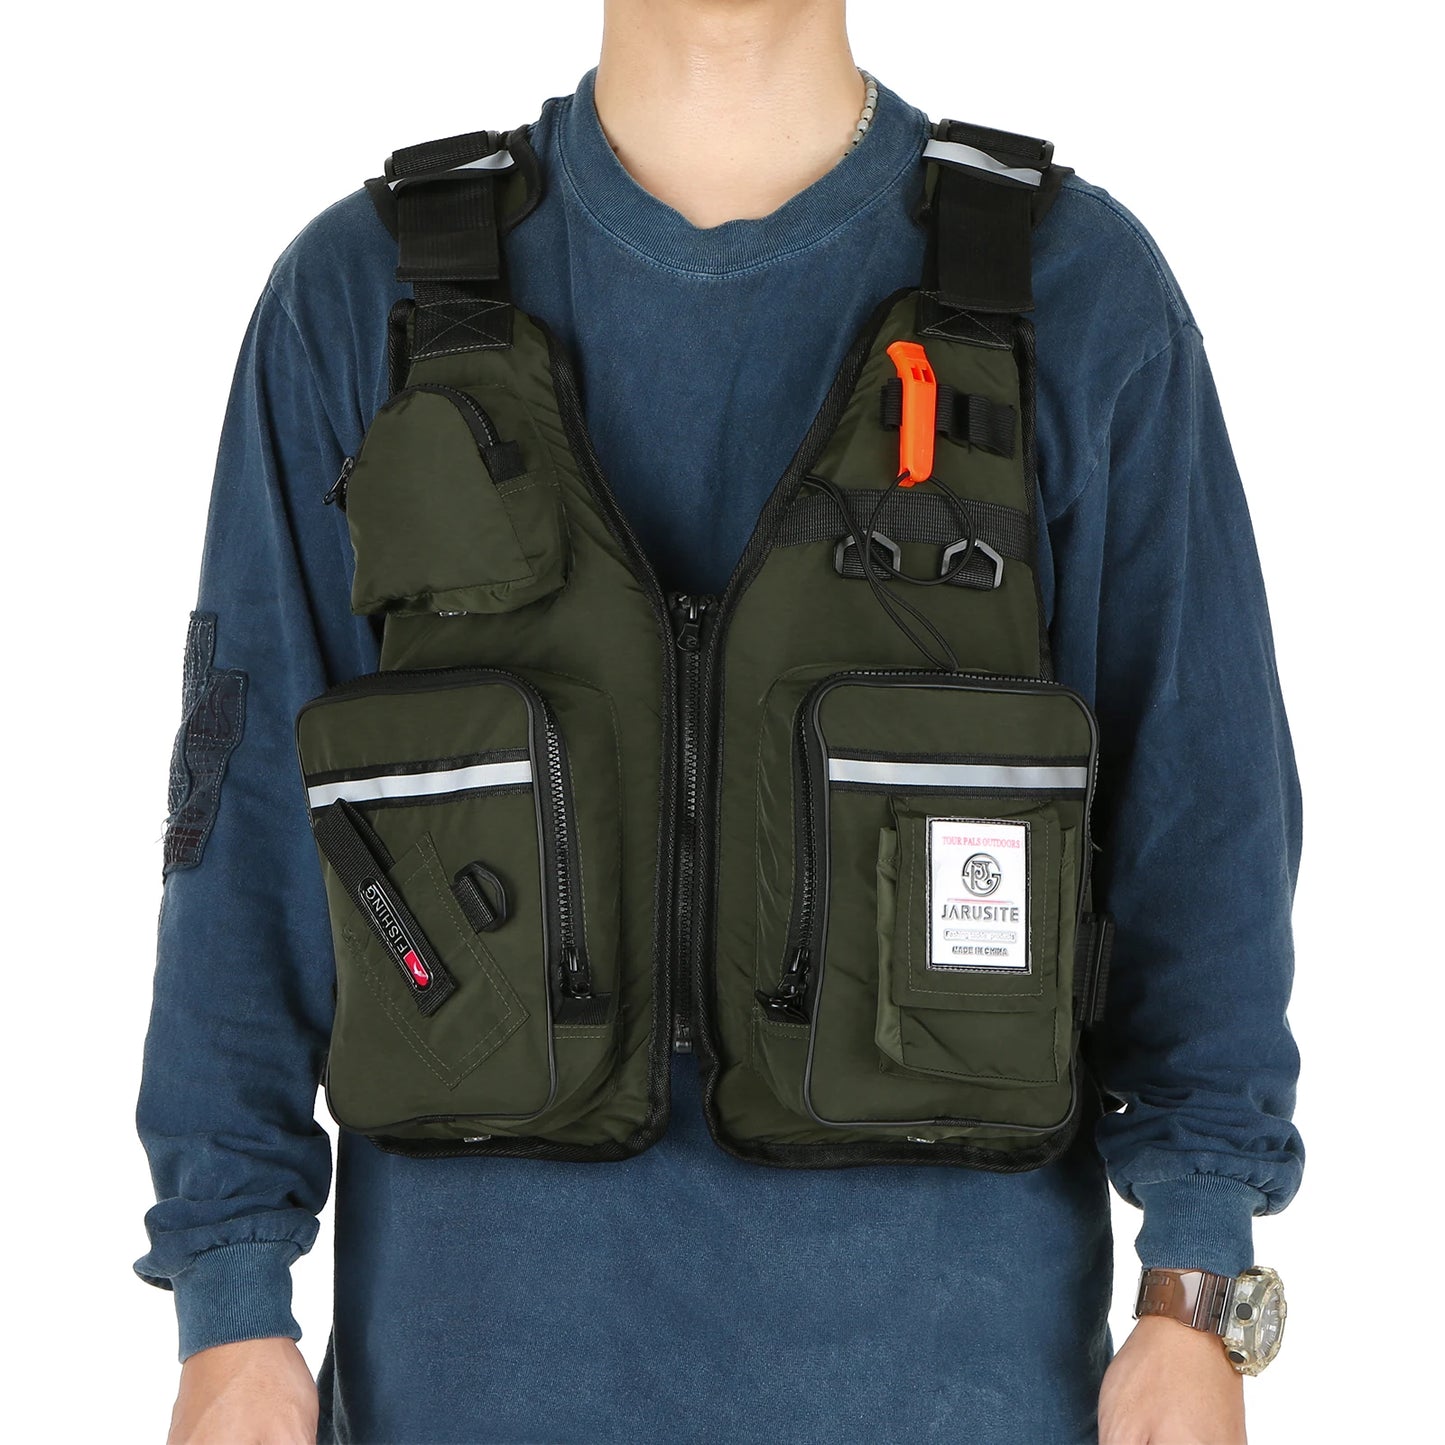 Multi-Pockets Fly Fishing Life Jacket Vest